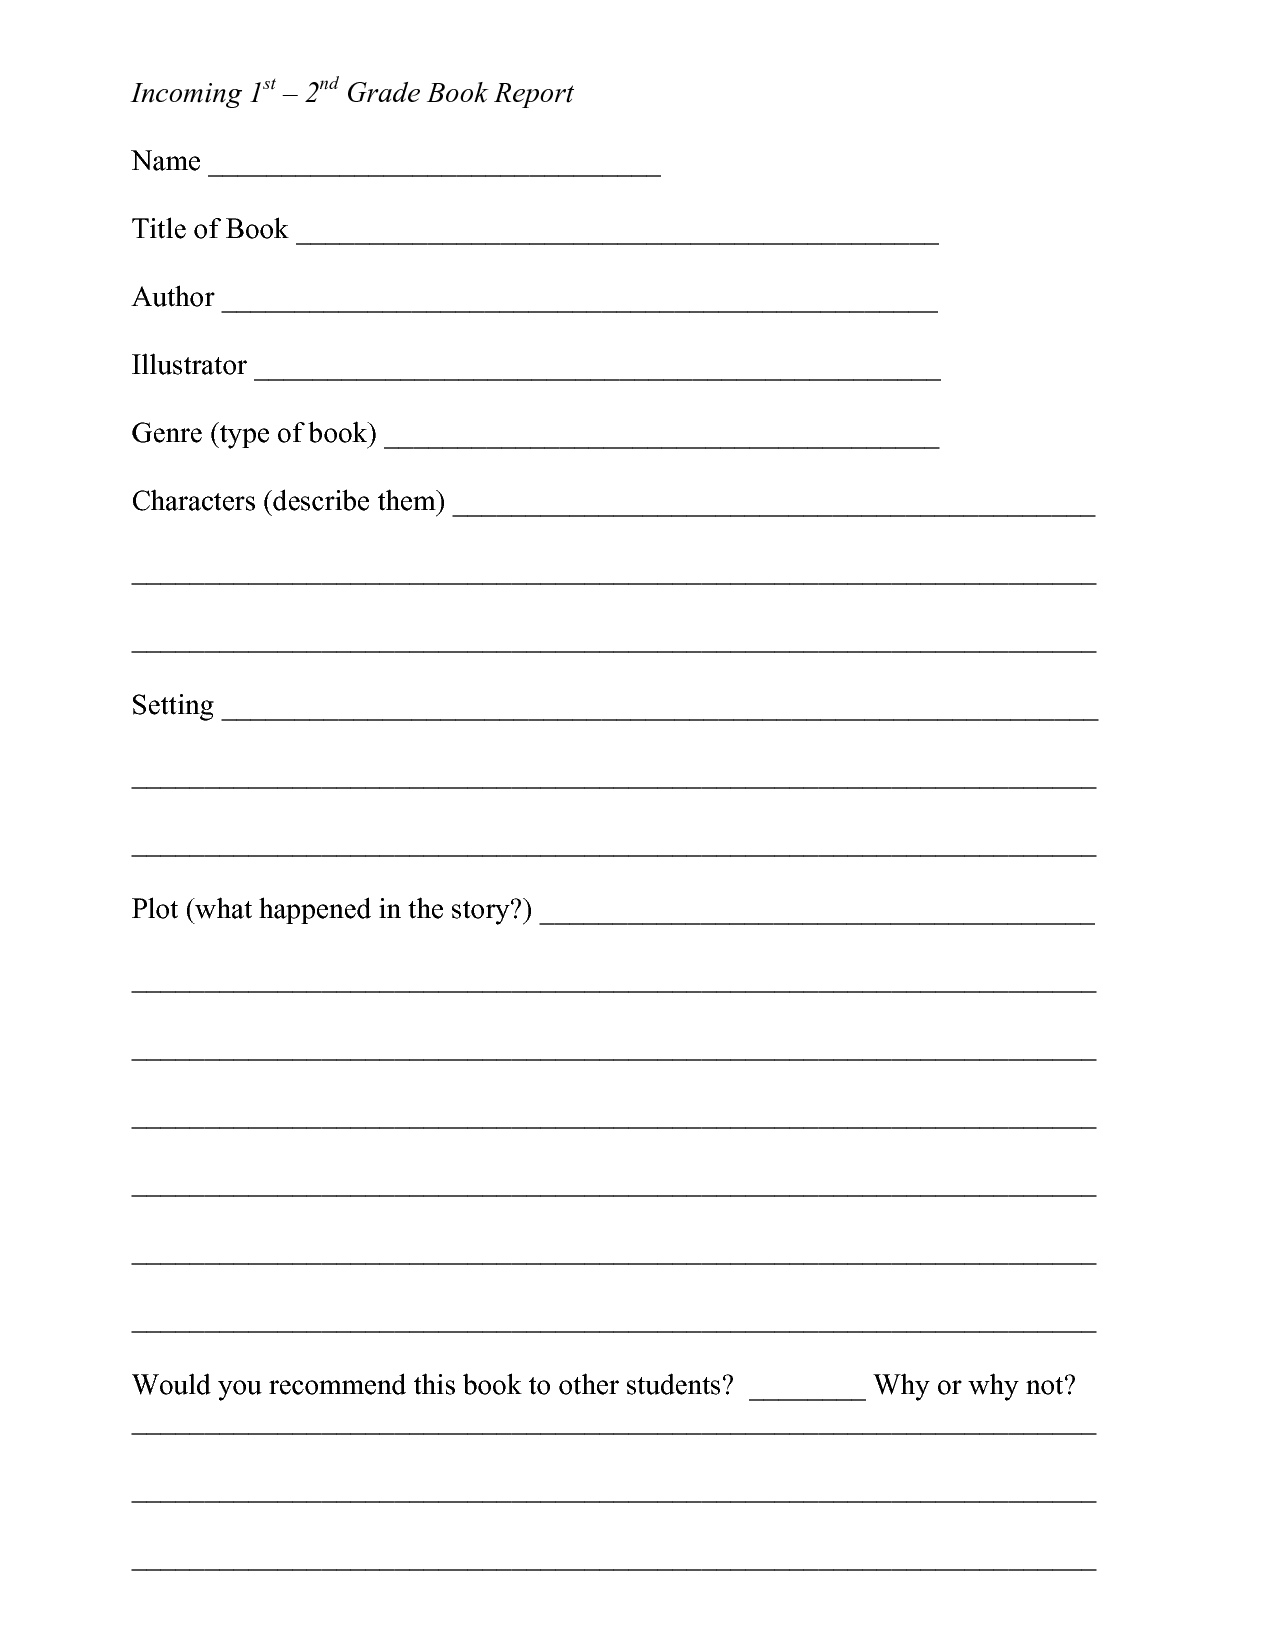 Book Report Template 2Nd Grade Free – Book Report Form Inside Second Grade Book Report Template